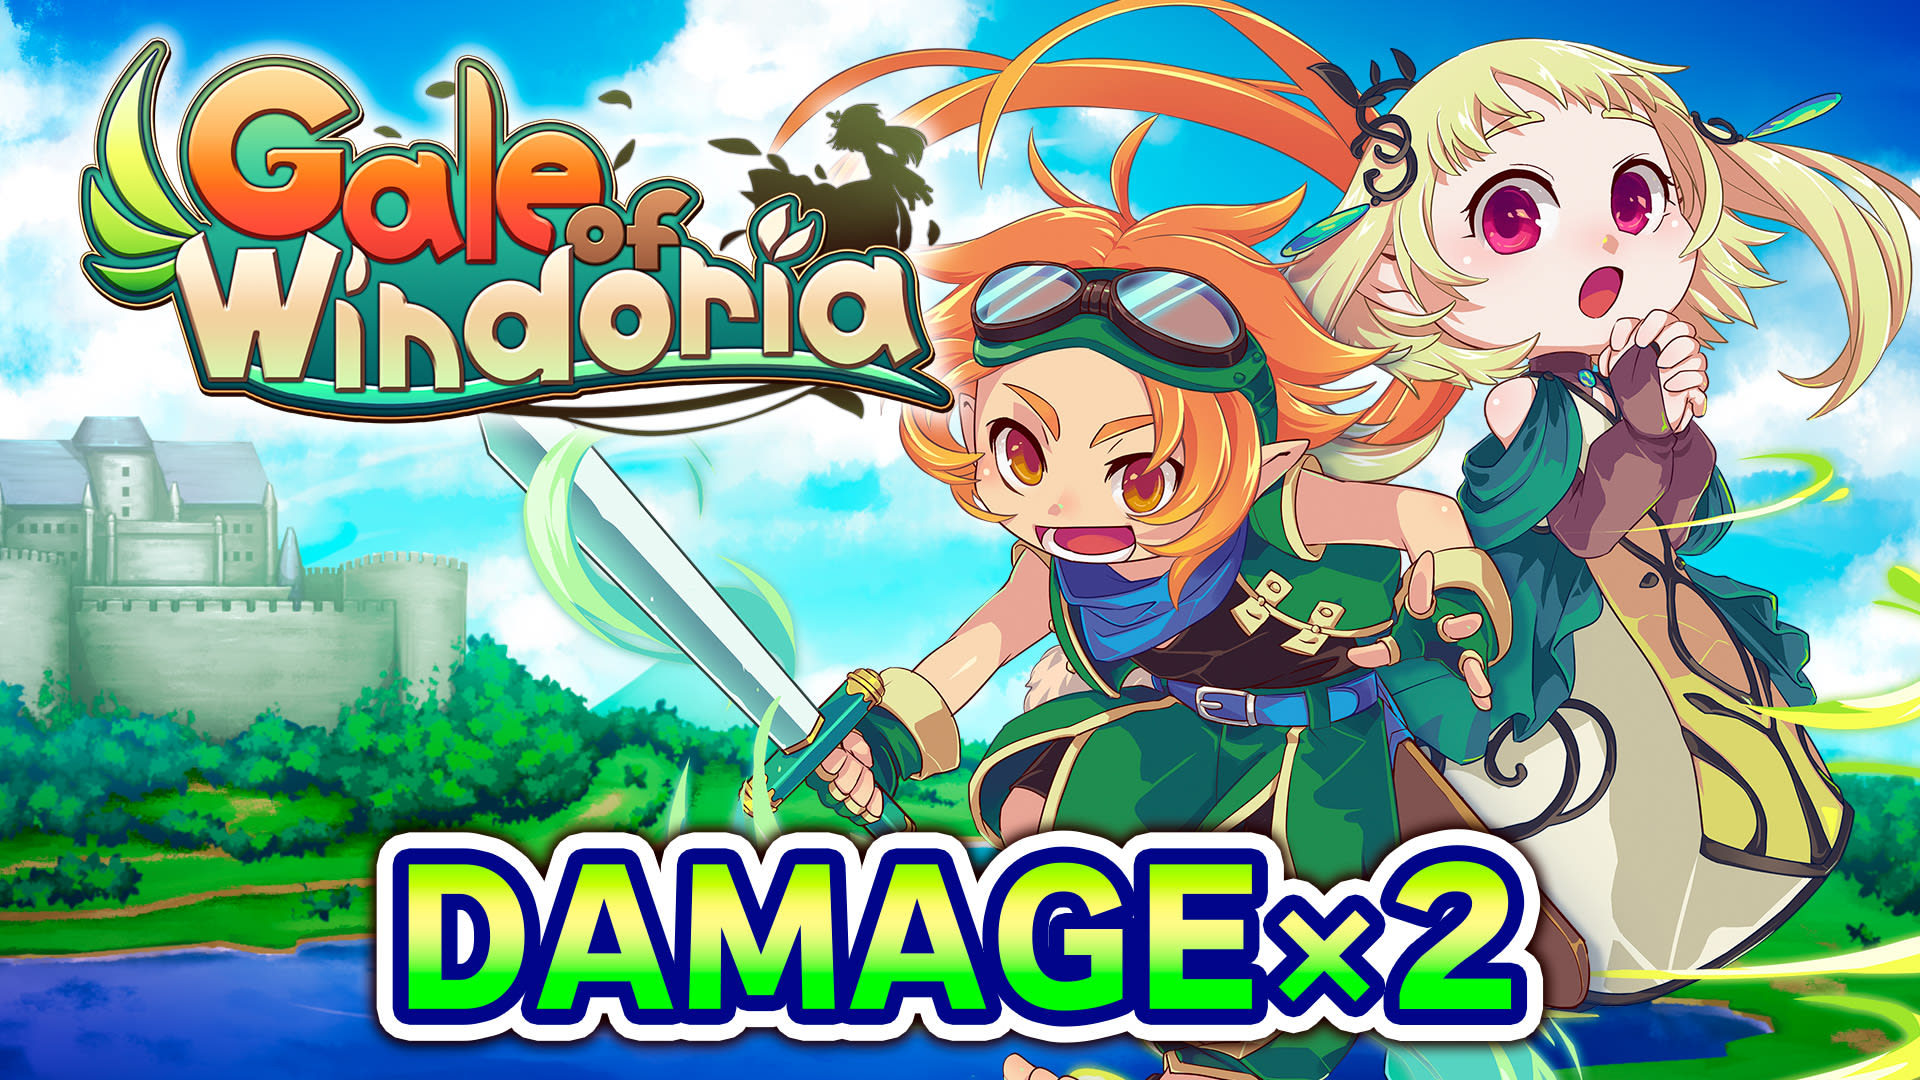 Damage x2 - Gale of Windoria